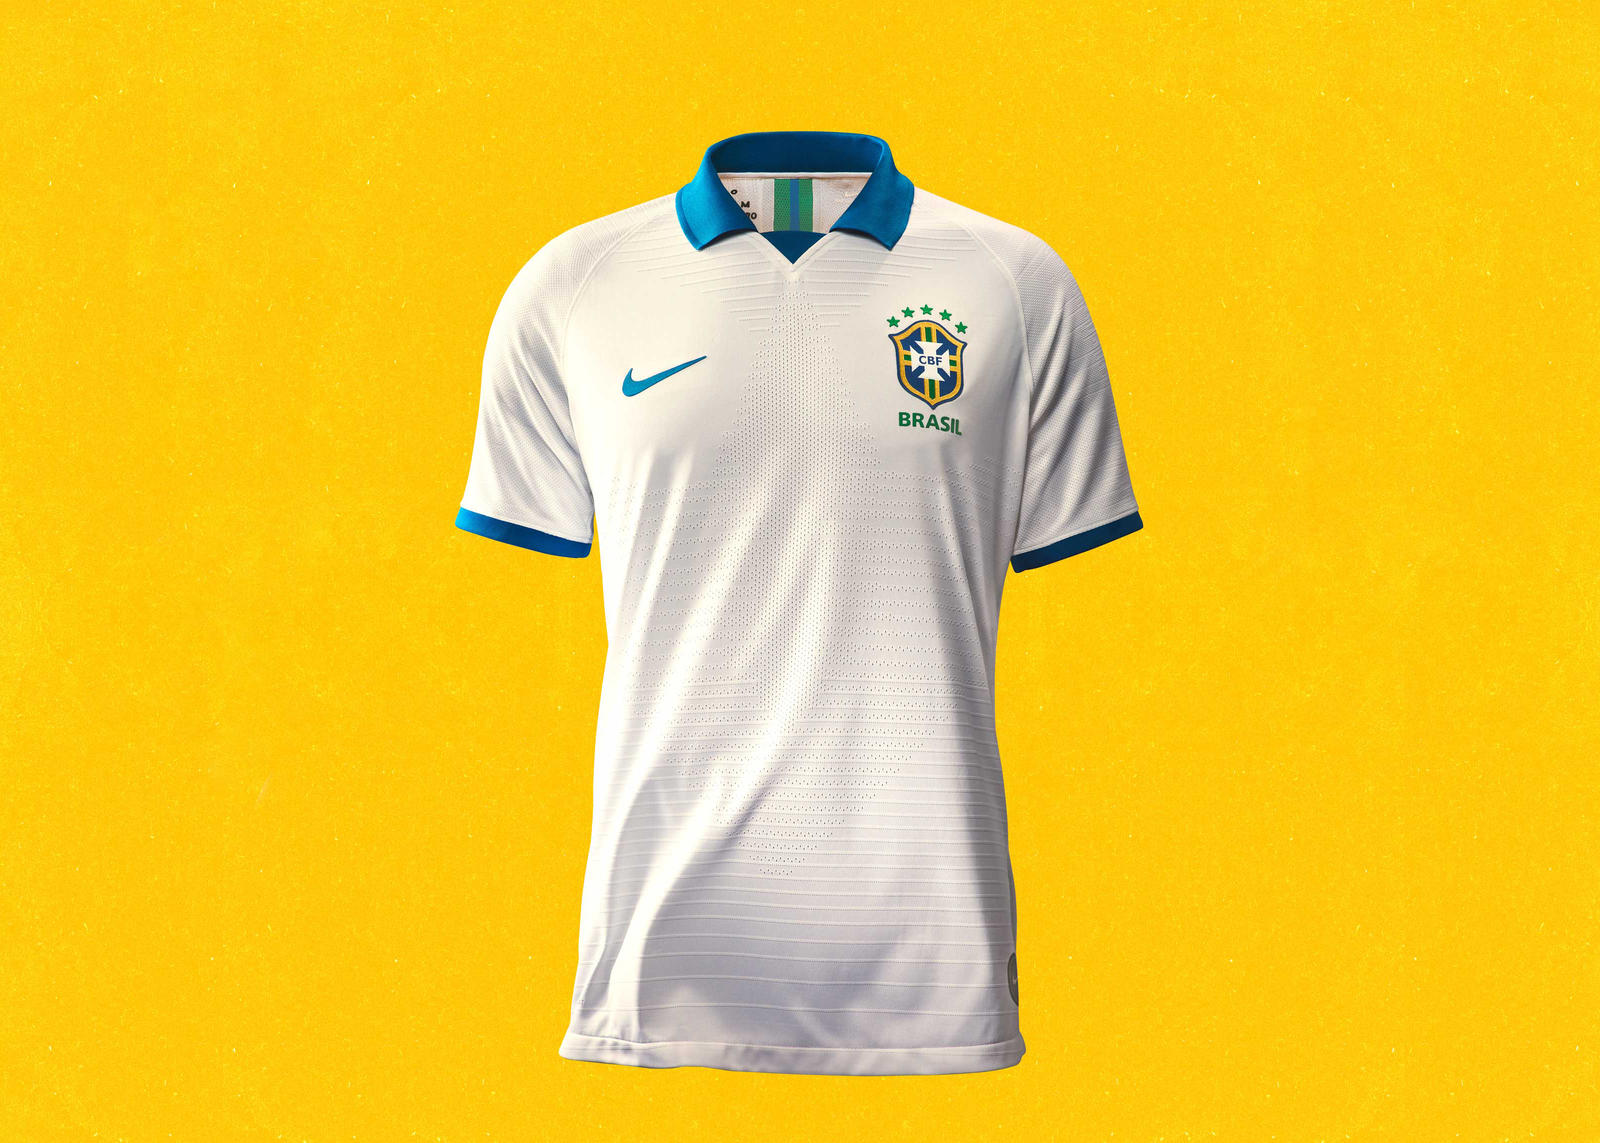 https://www.arunfoot.com/wp-content/uploads/2019/04/Nike-Brazil-jersey.jpg